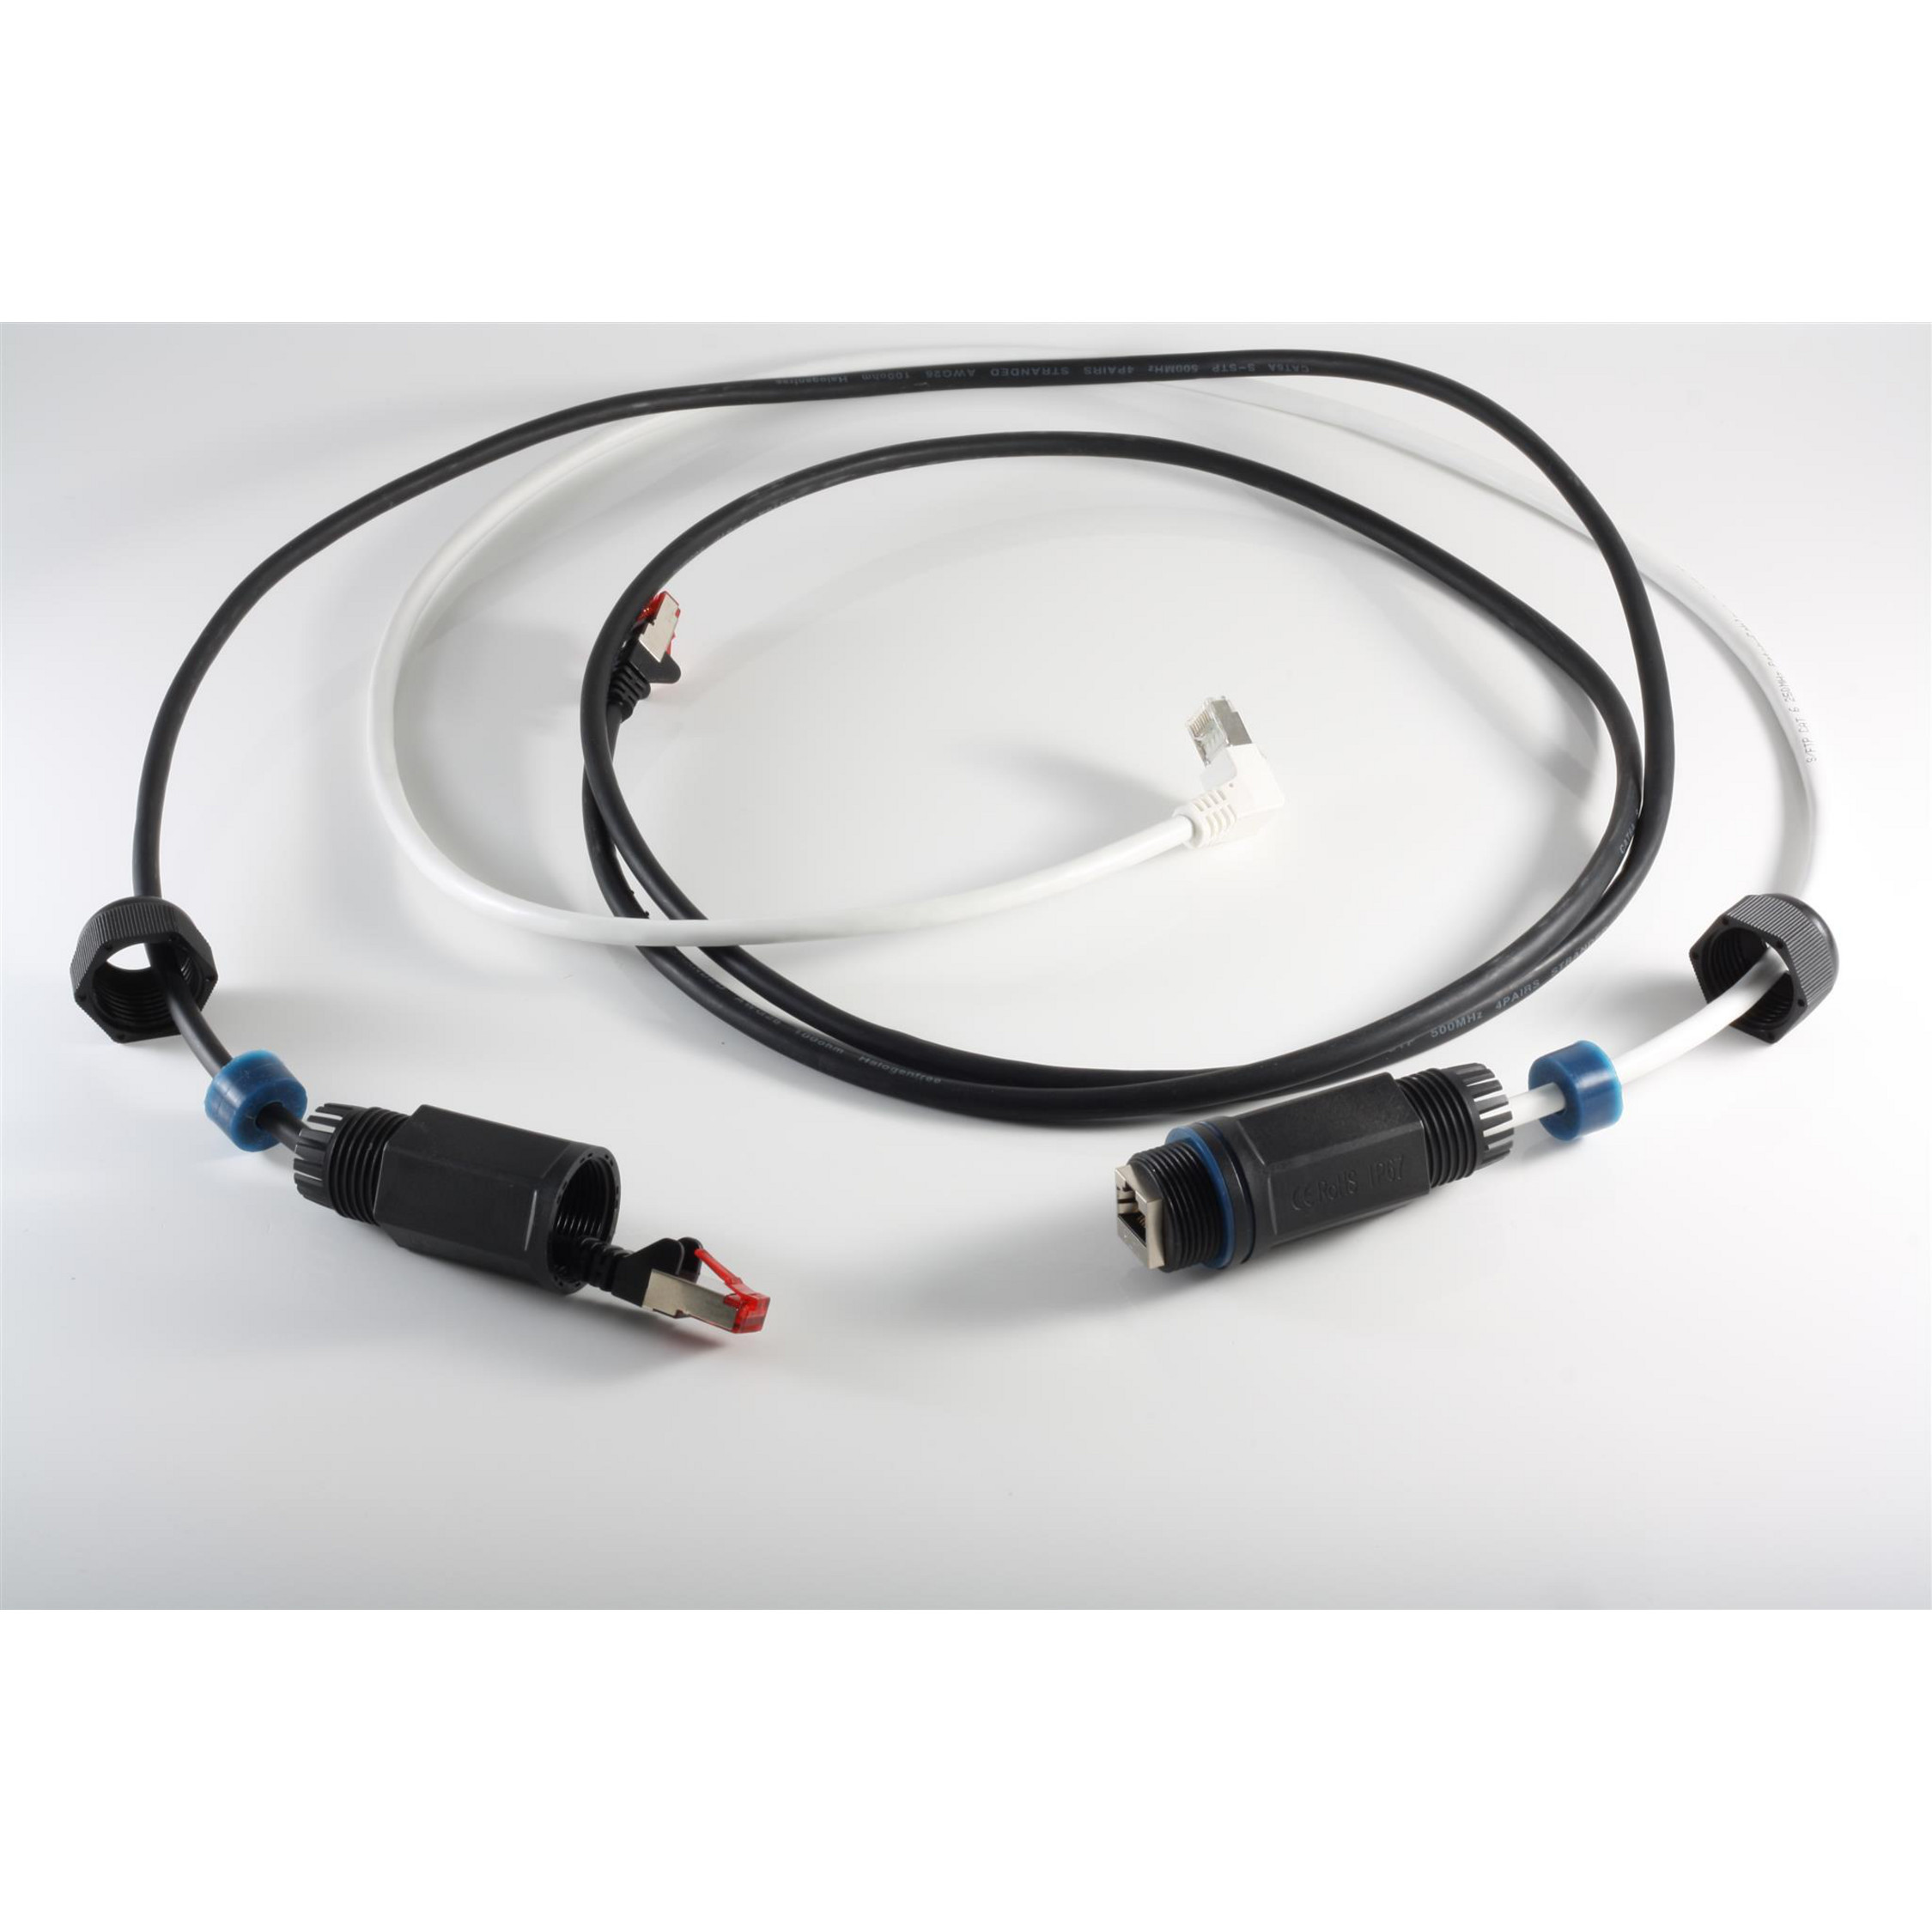 Verlängerung Sensor Kabel, IP67, Outdoor, RJ45